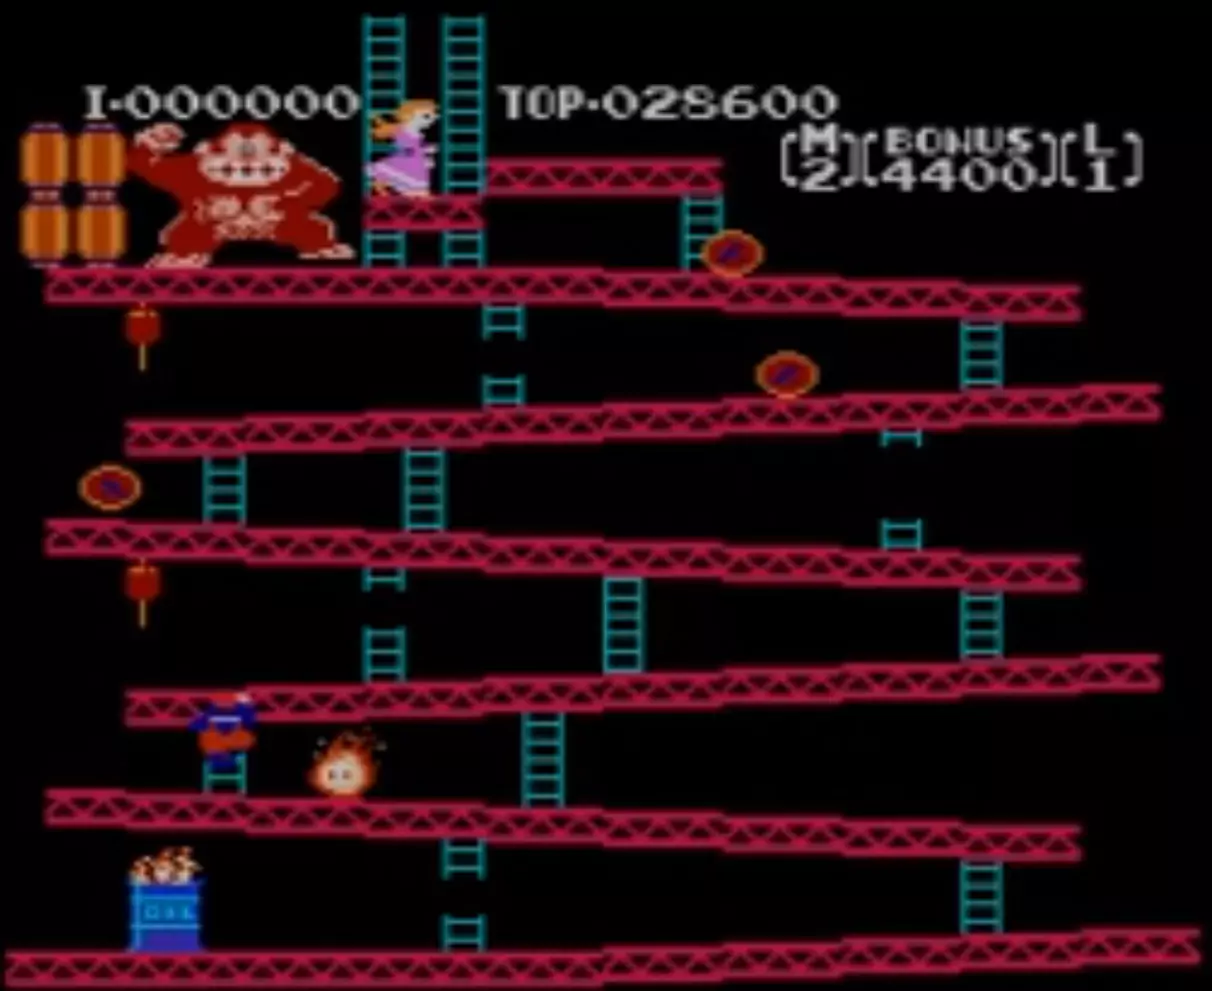 Jumpman (Mario) climbing a ladder to get closer to Donkey Kong and Princess Pauline in the Platformer game Donkey Kong.